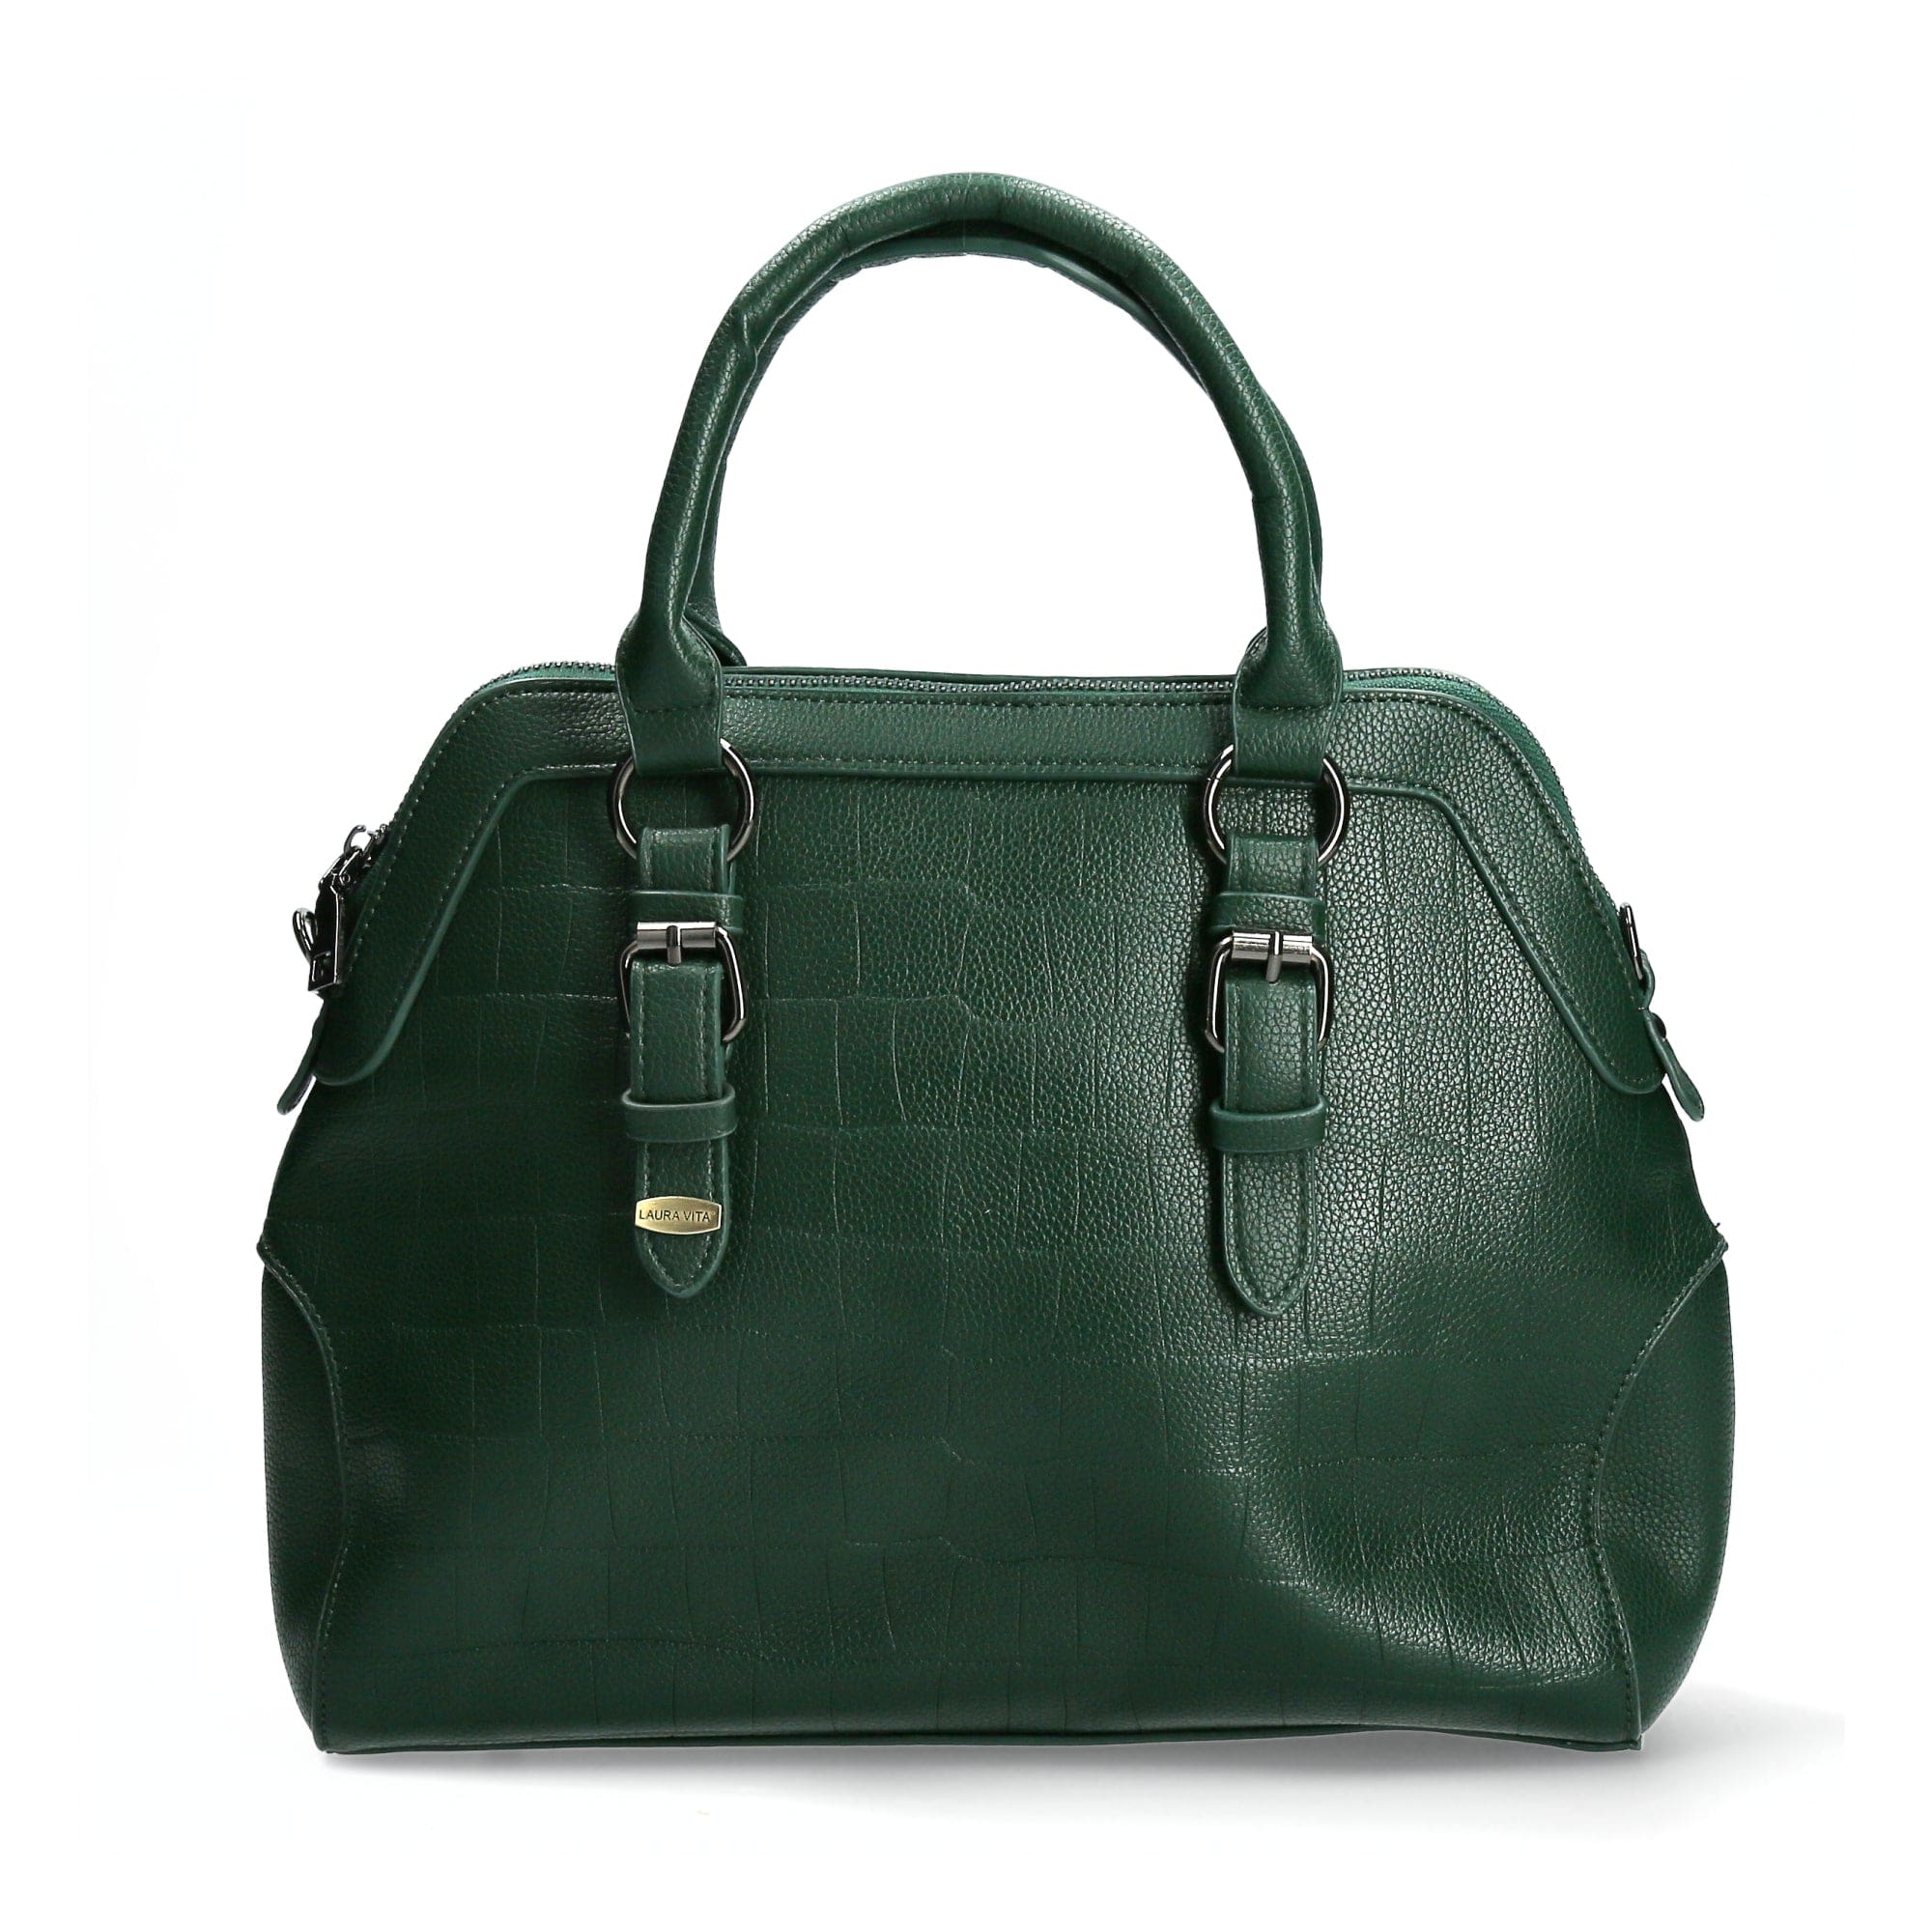 Baya Exclusivity leather bag - Green